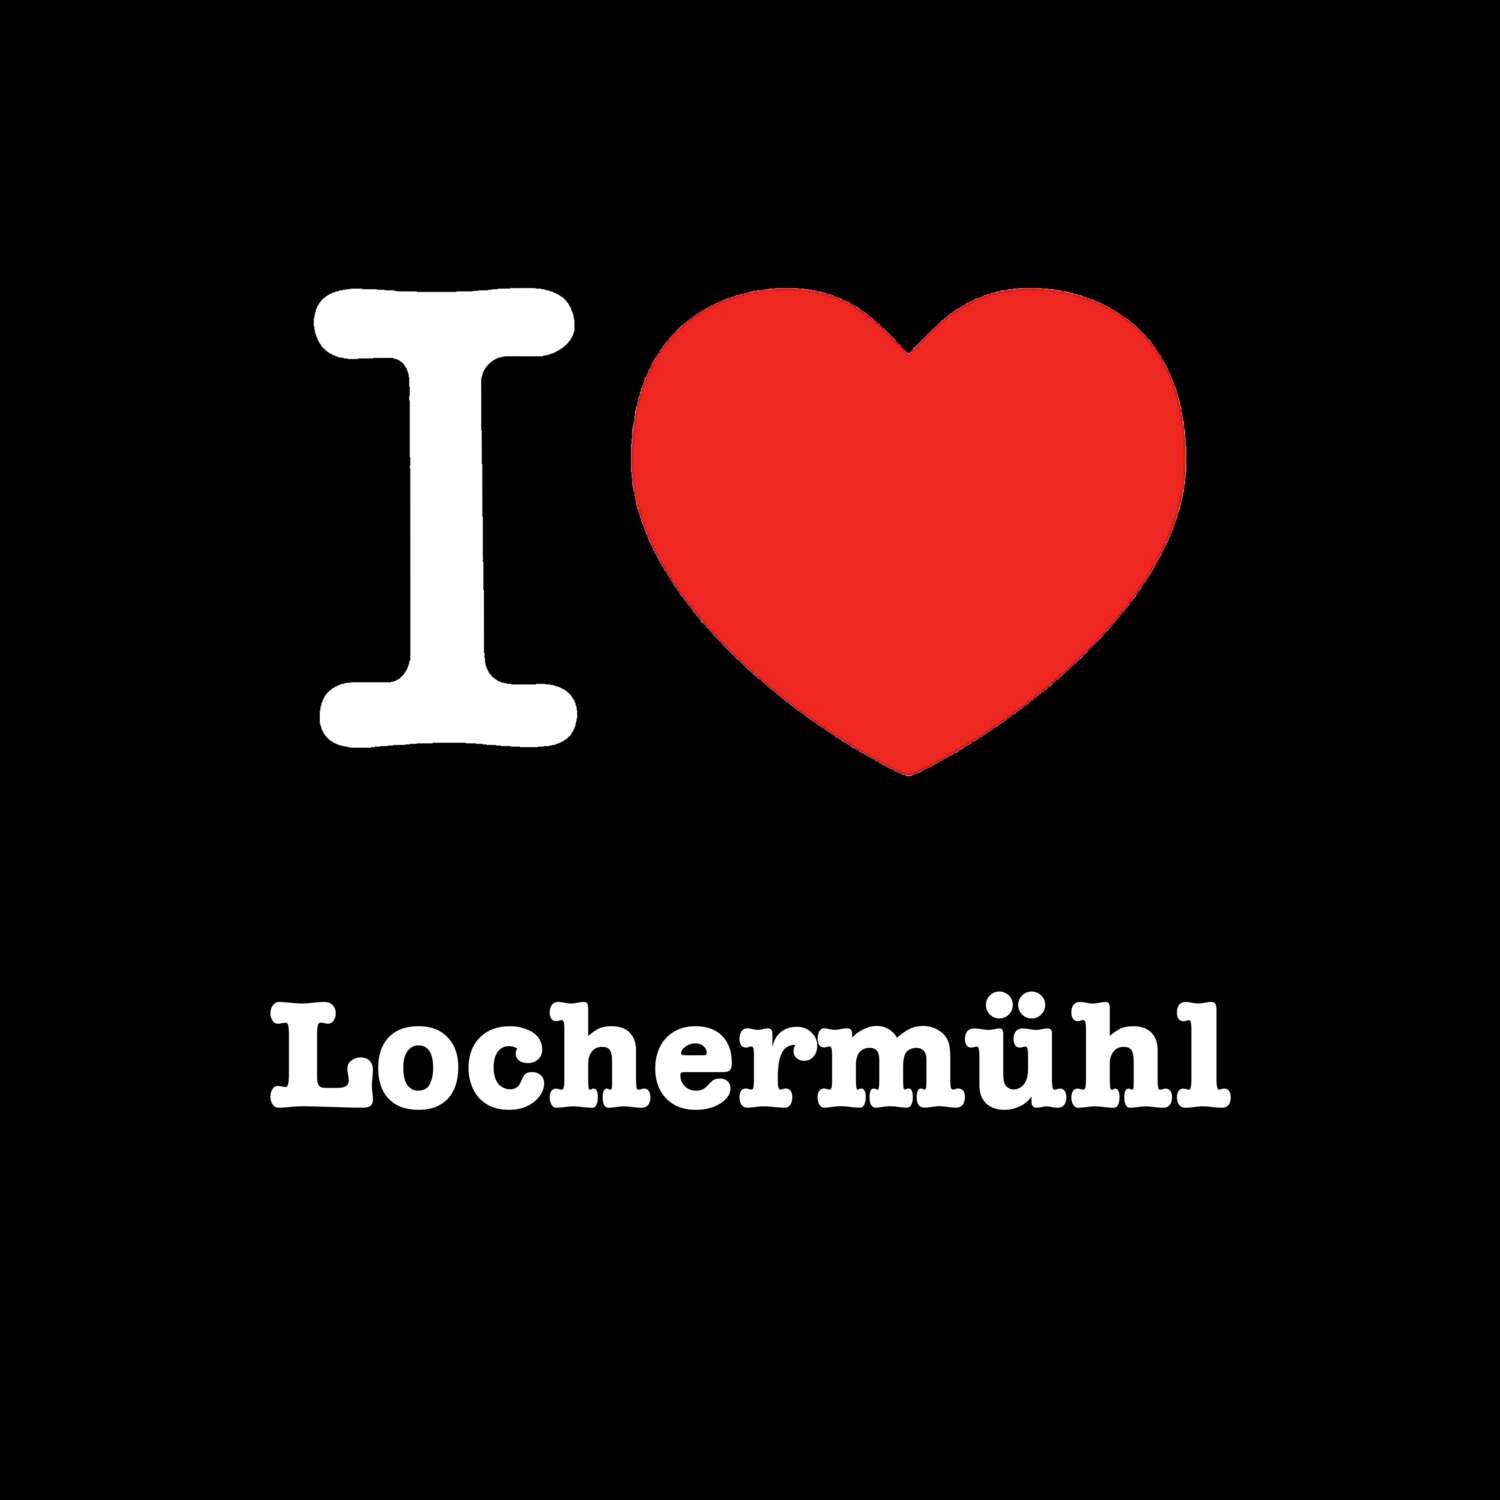 Lochermühl T-Shirt »I love«